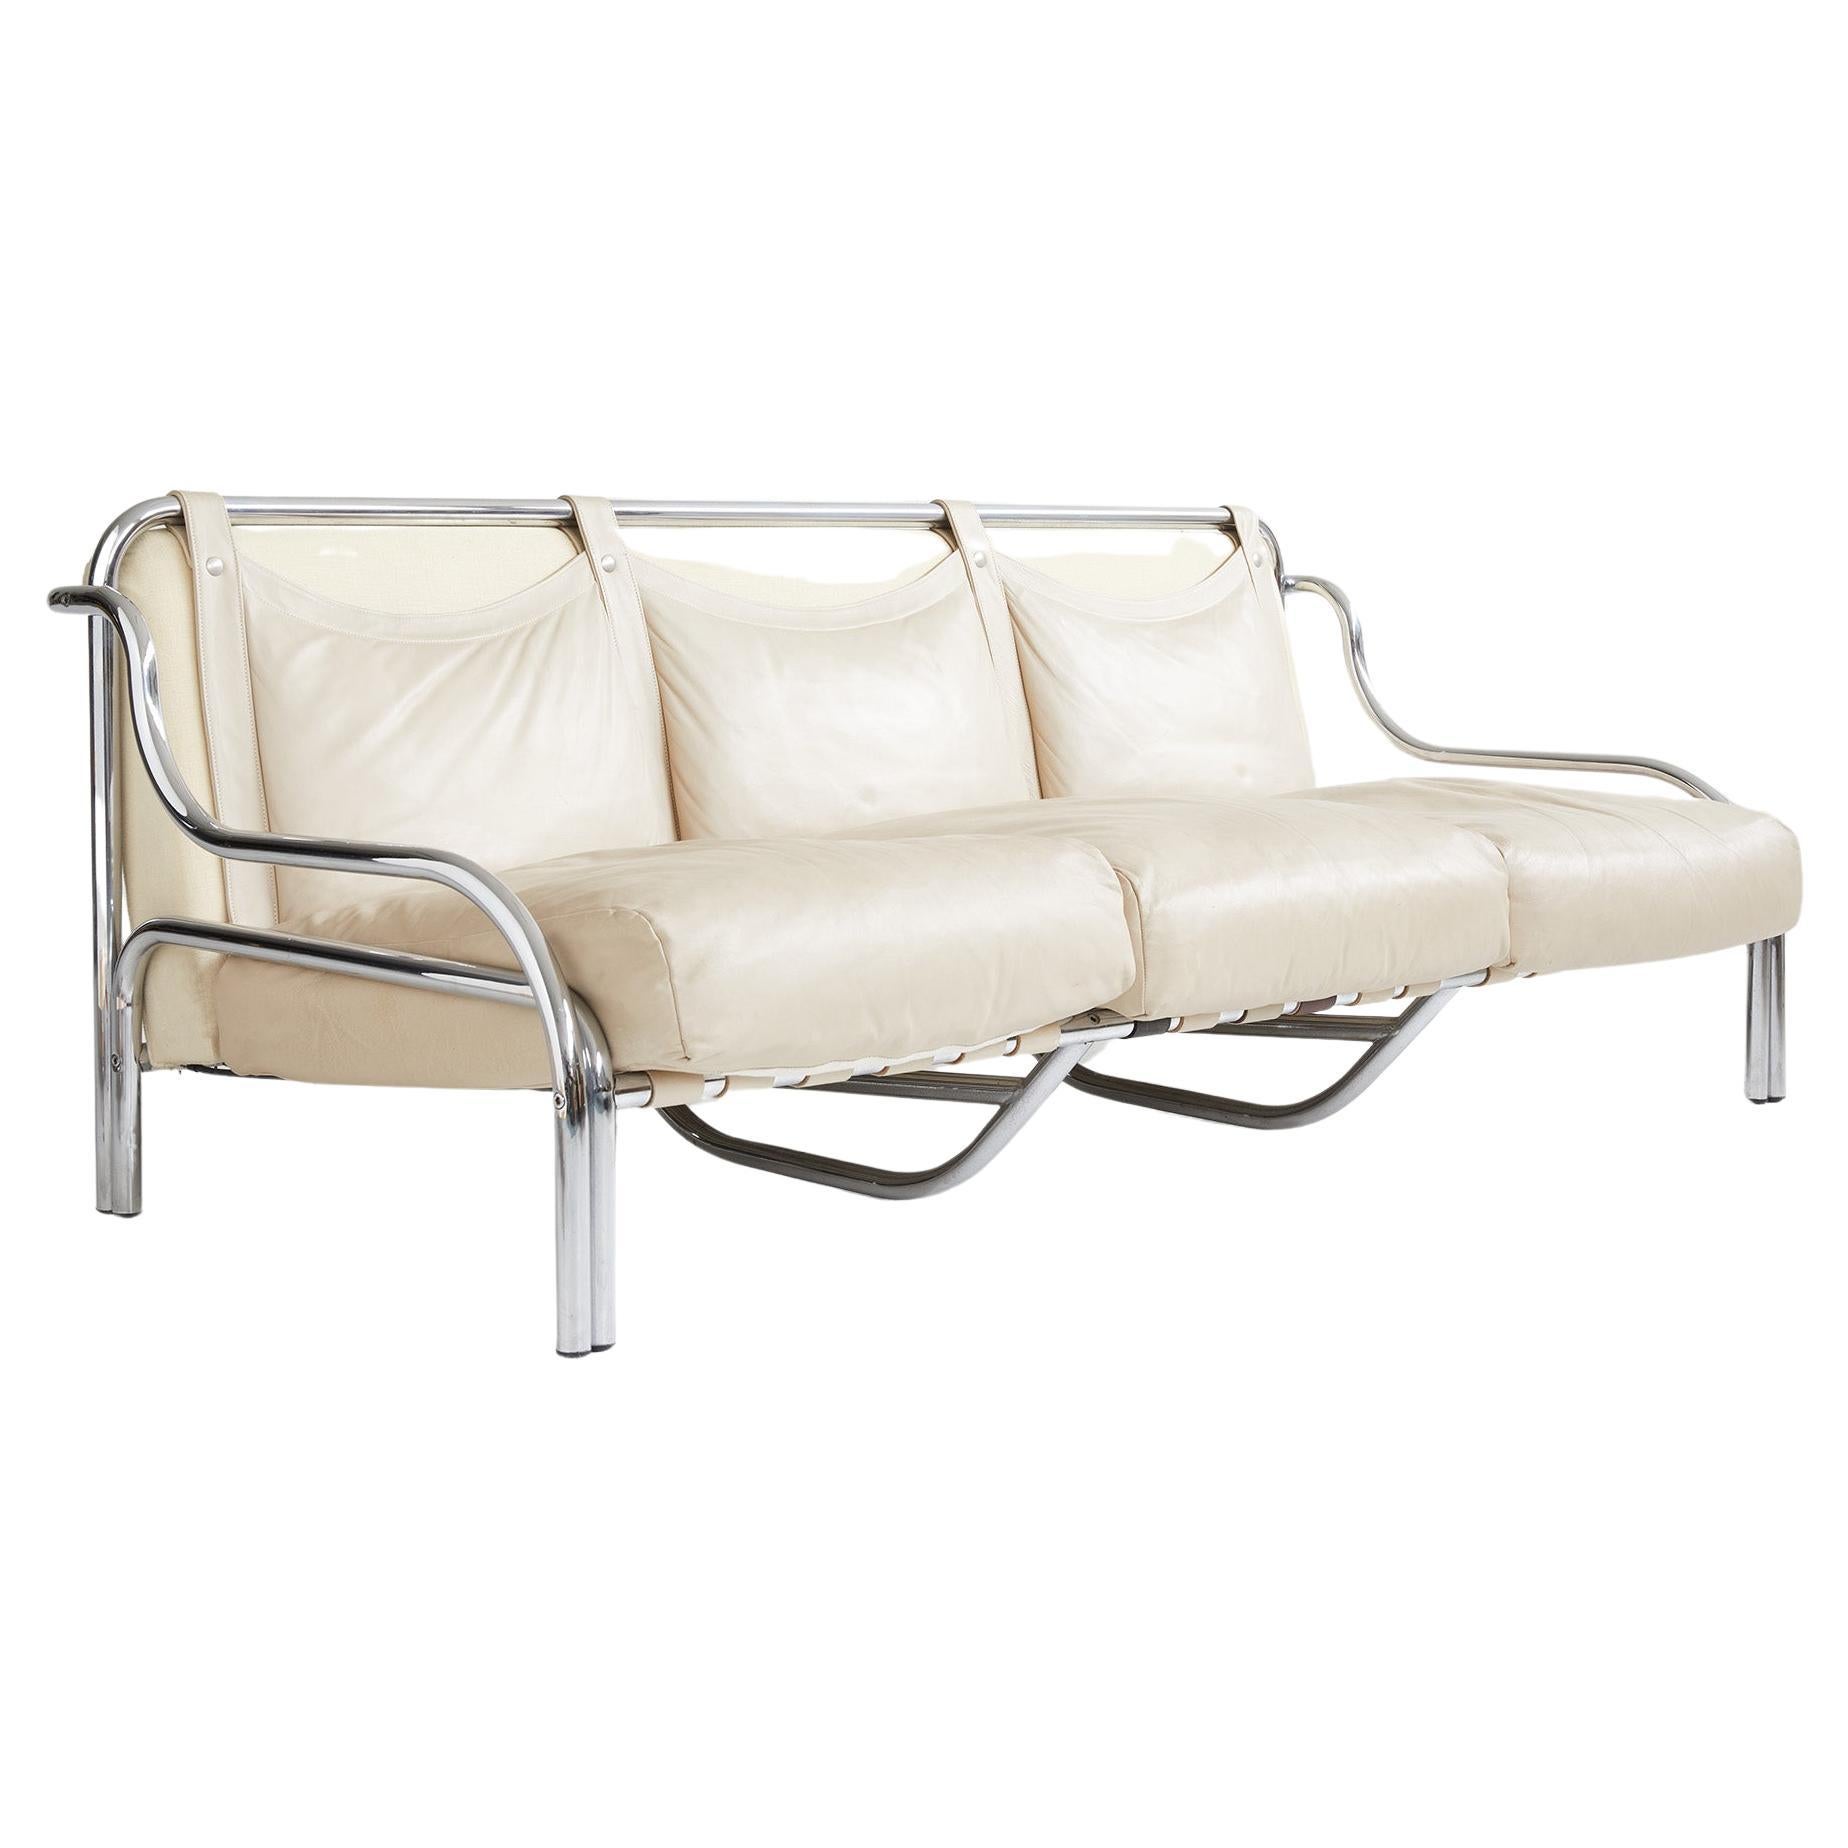 Dreisitziges Leders Sofa „Stringa“ von Gae Aulenti für Poltronova, Italien 1962